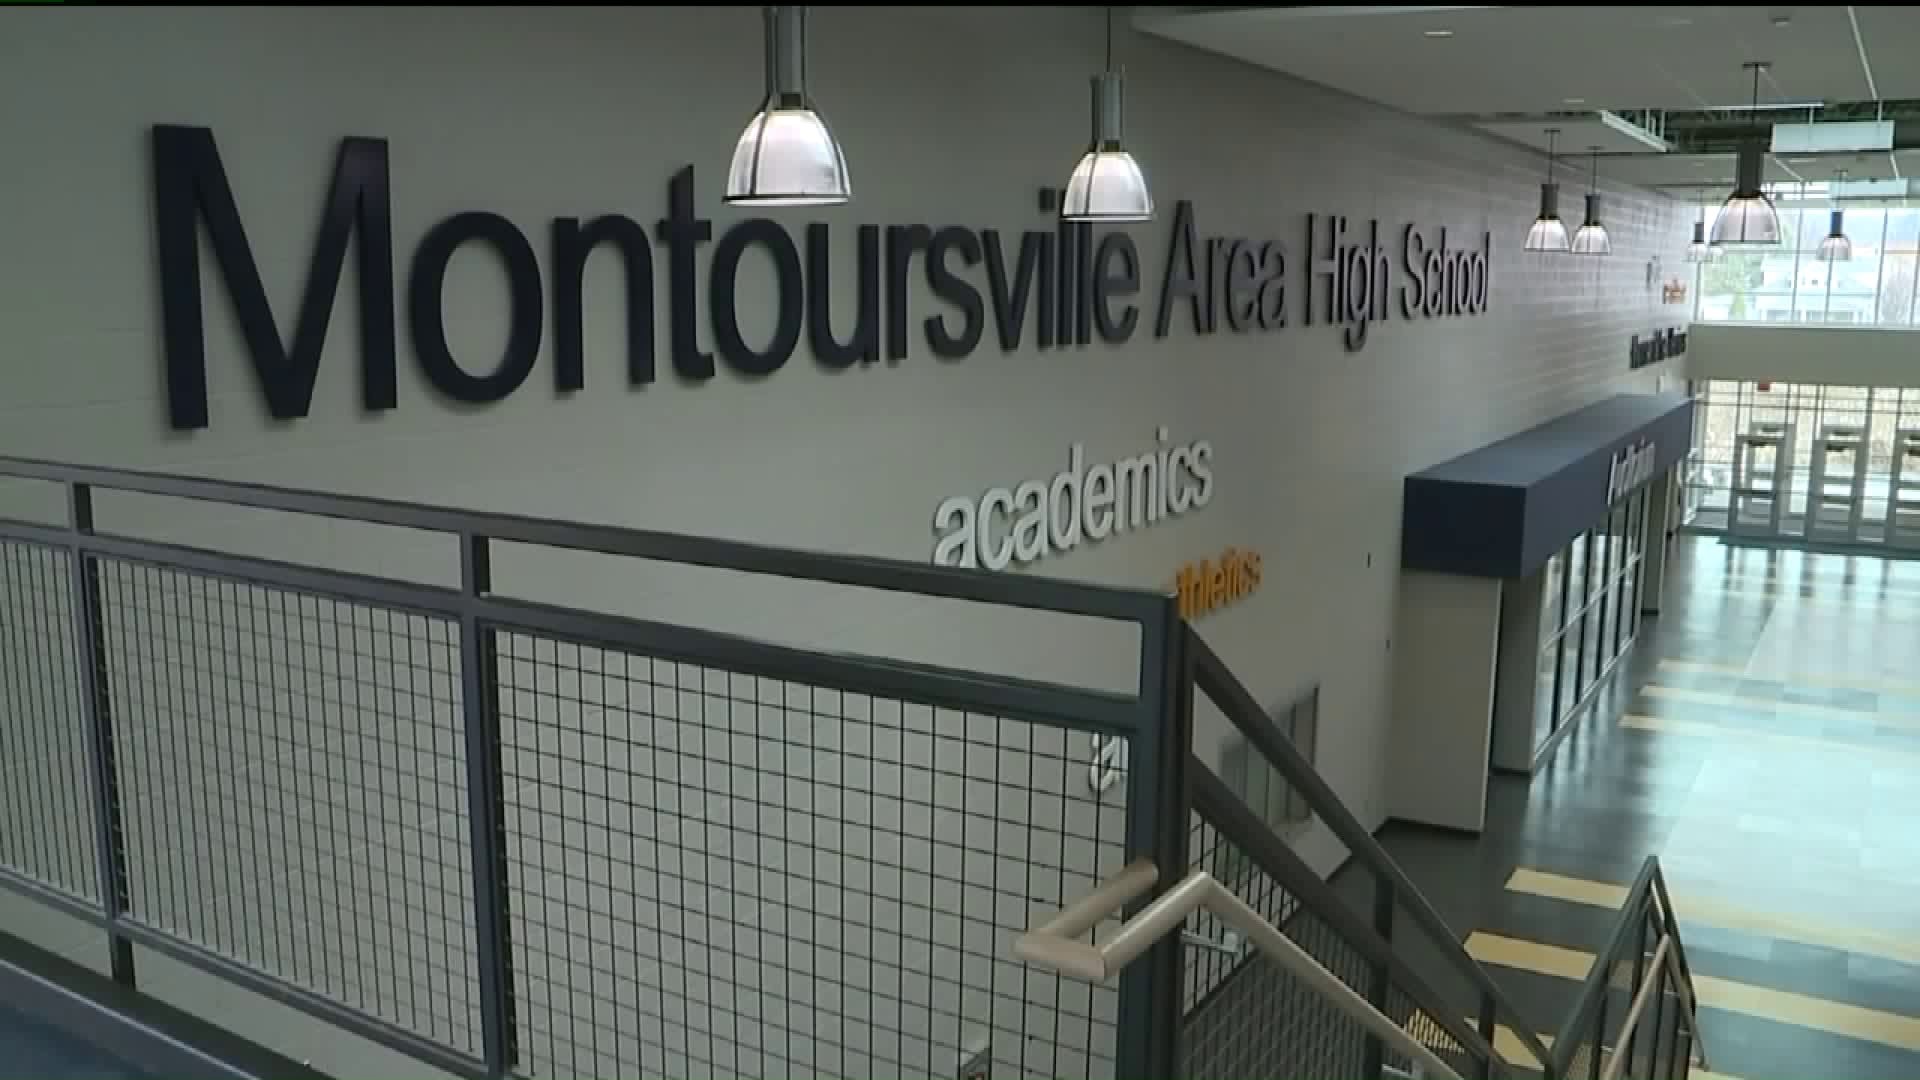 New High School Opens in Montoursville